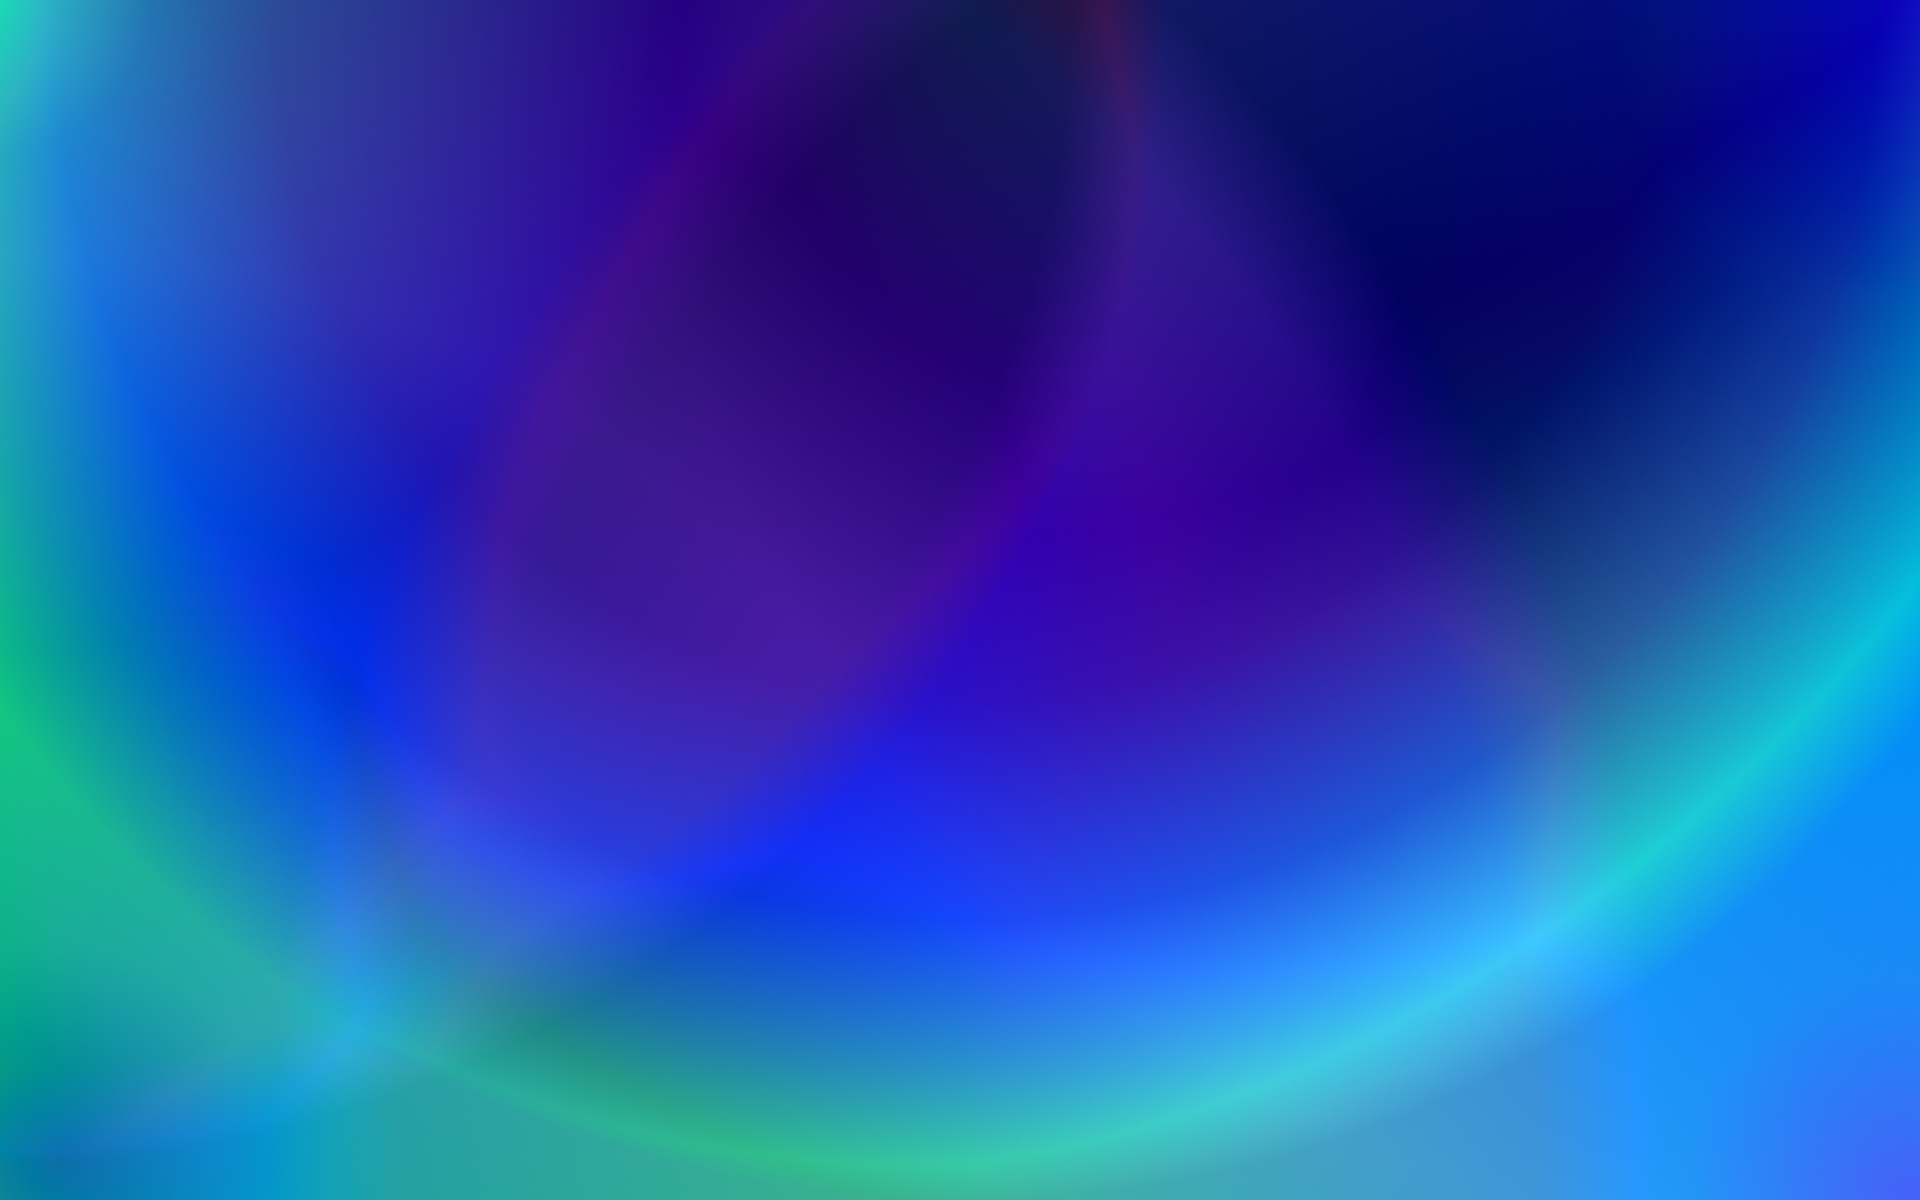 neon wallpaper abstract blue background 1920x1200jpg 1920x1200 94706